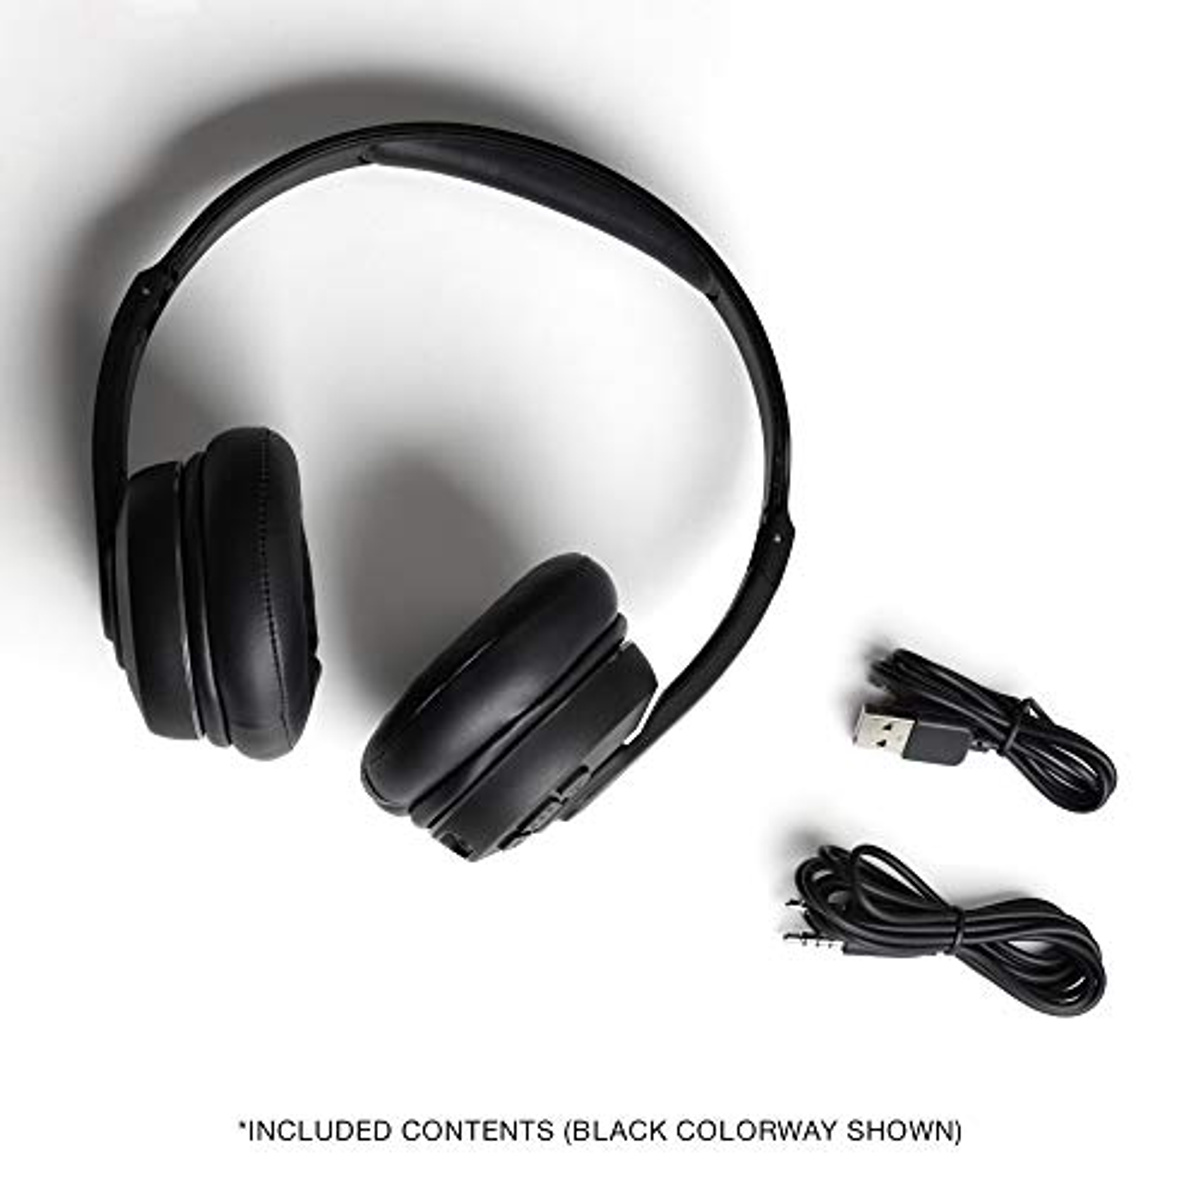 SKULLCANDY S5CSW-M448, On-ear Bluetooth kopfhörer Schwarz Bluetooth